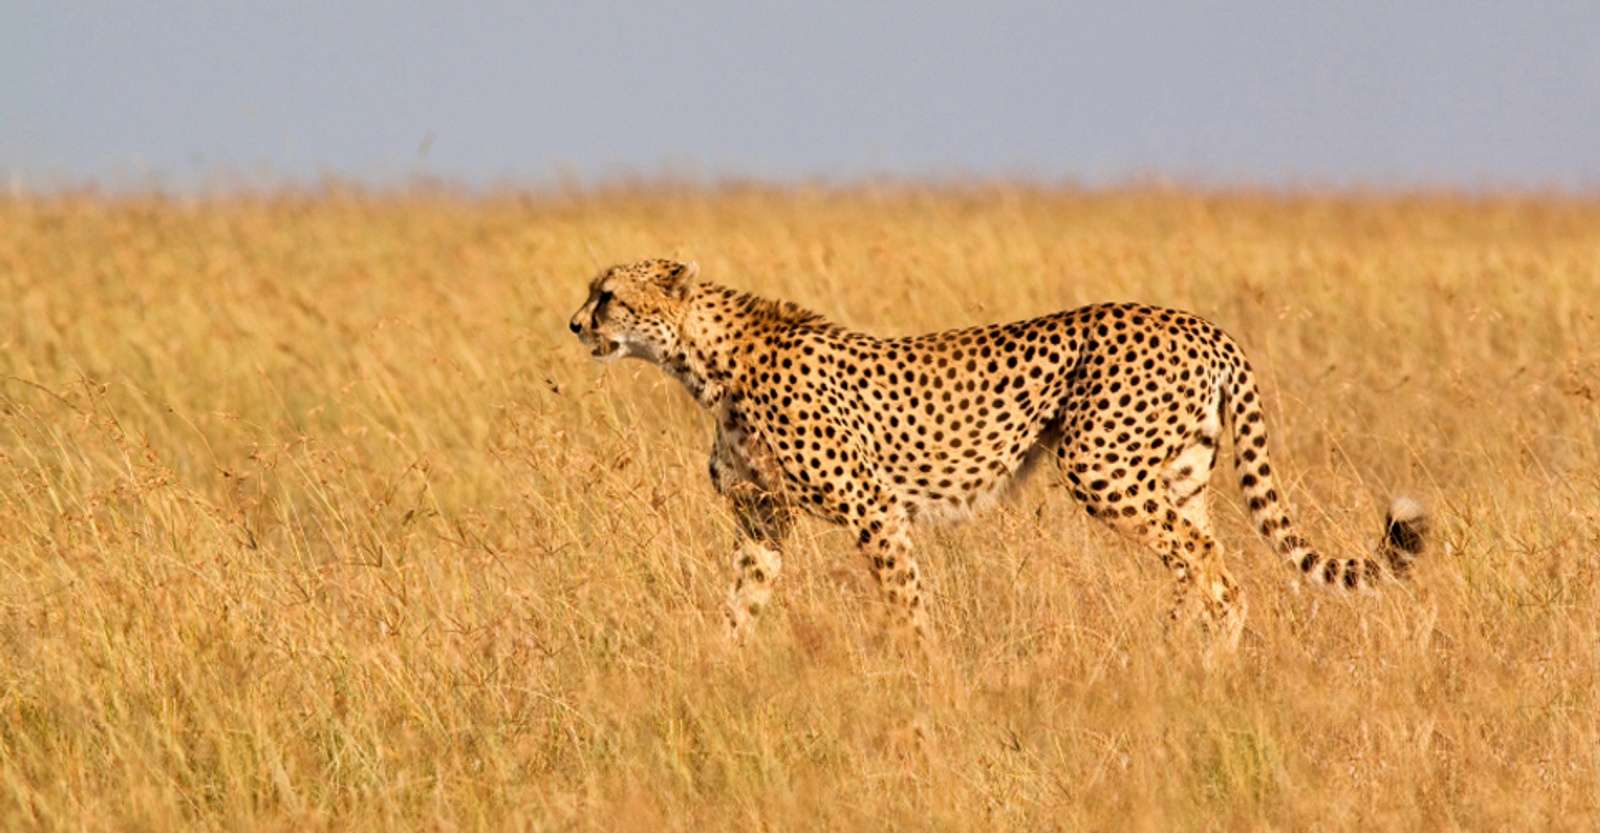 Cheetah, Maasai Mara National Reserve, Kenya.